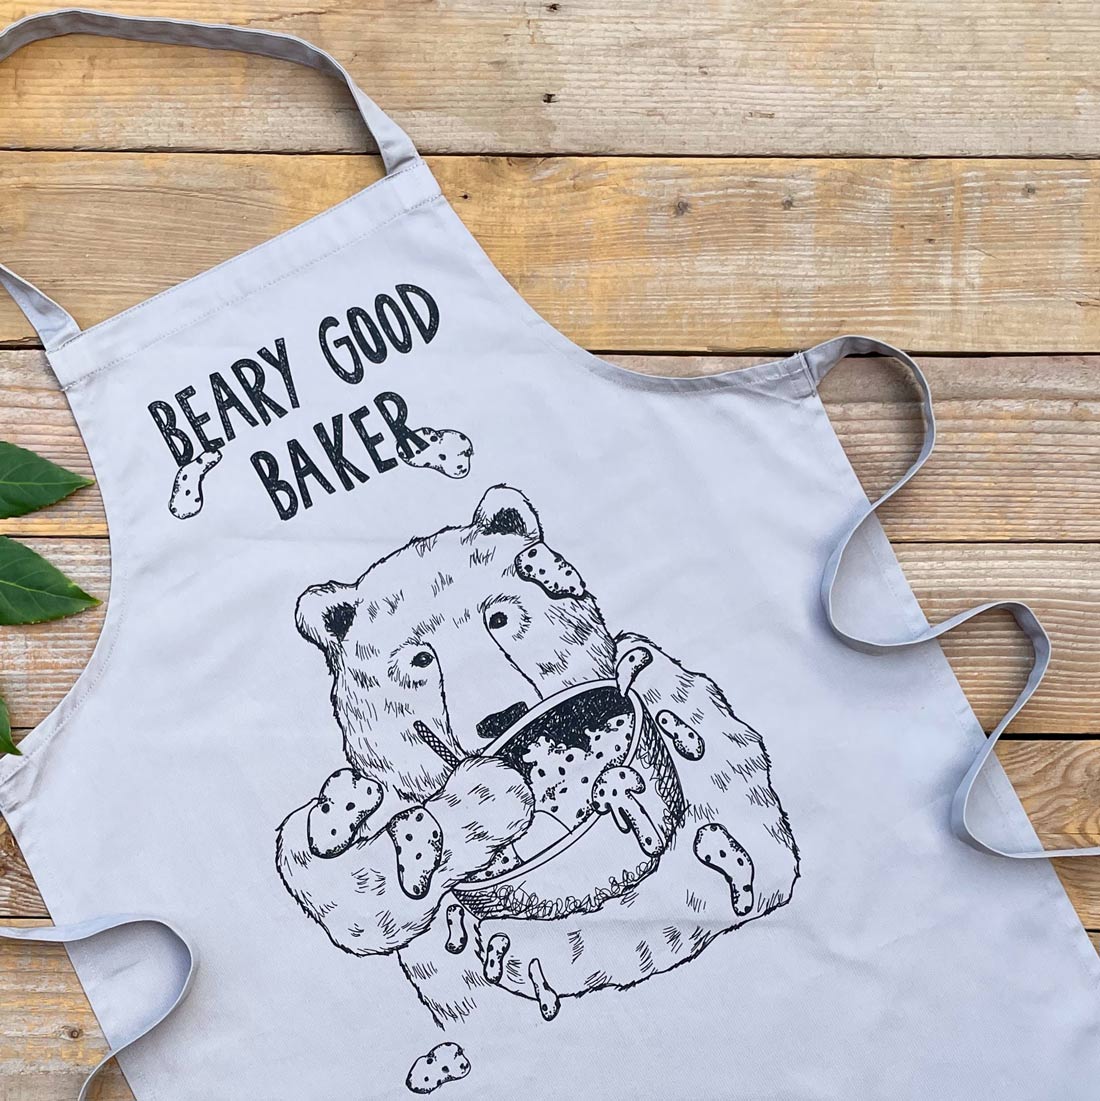 grey beary good baker apron